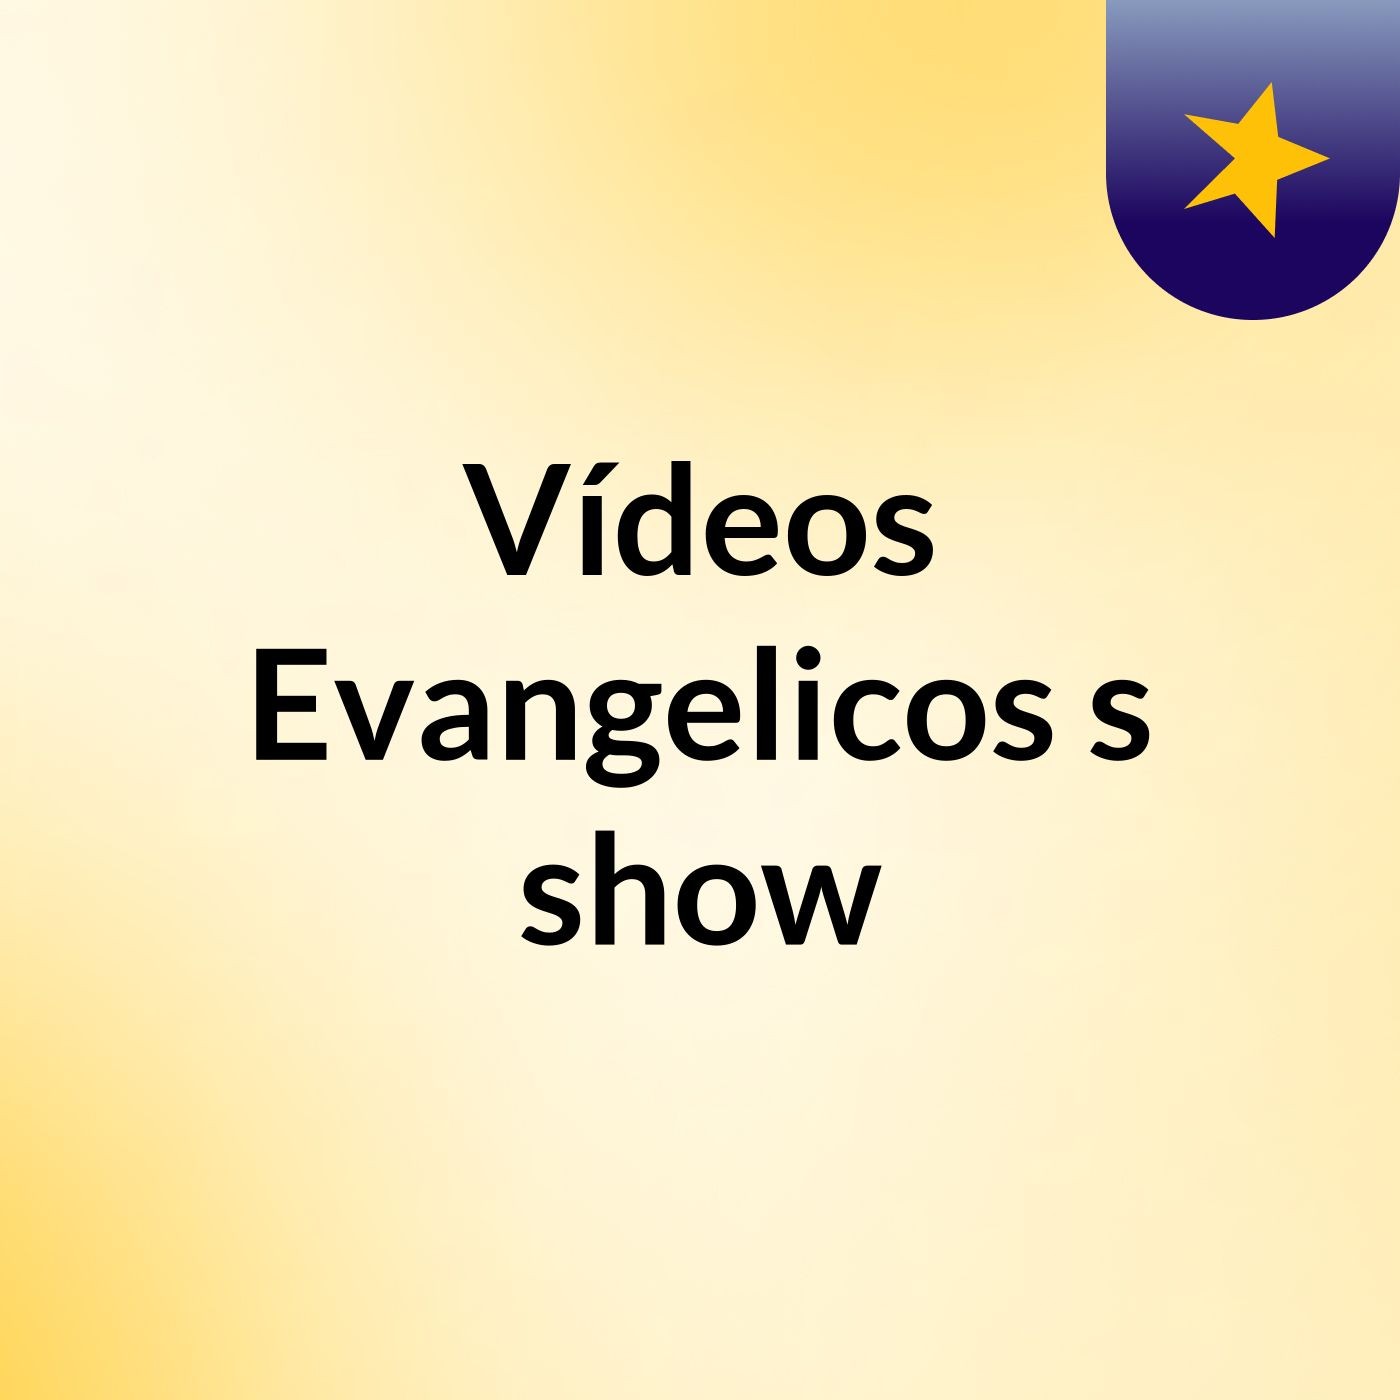 Vídeos Evangelicos's show